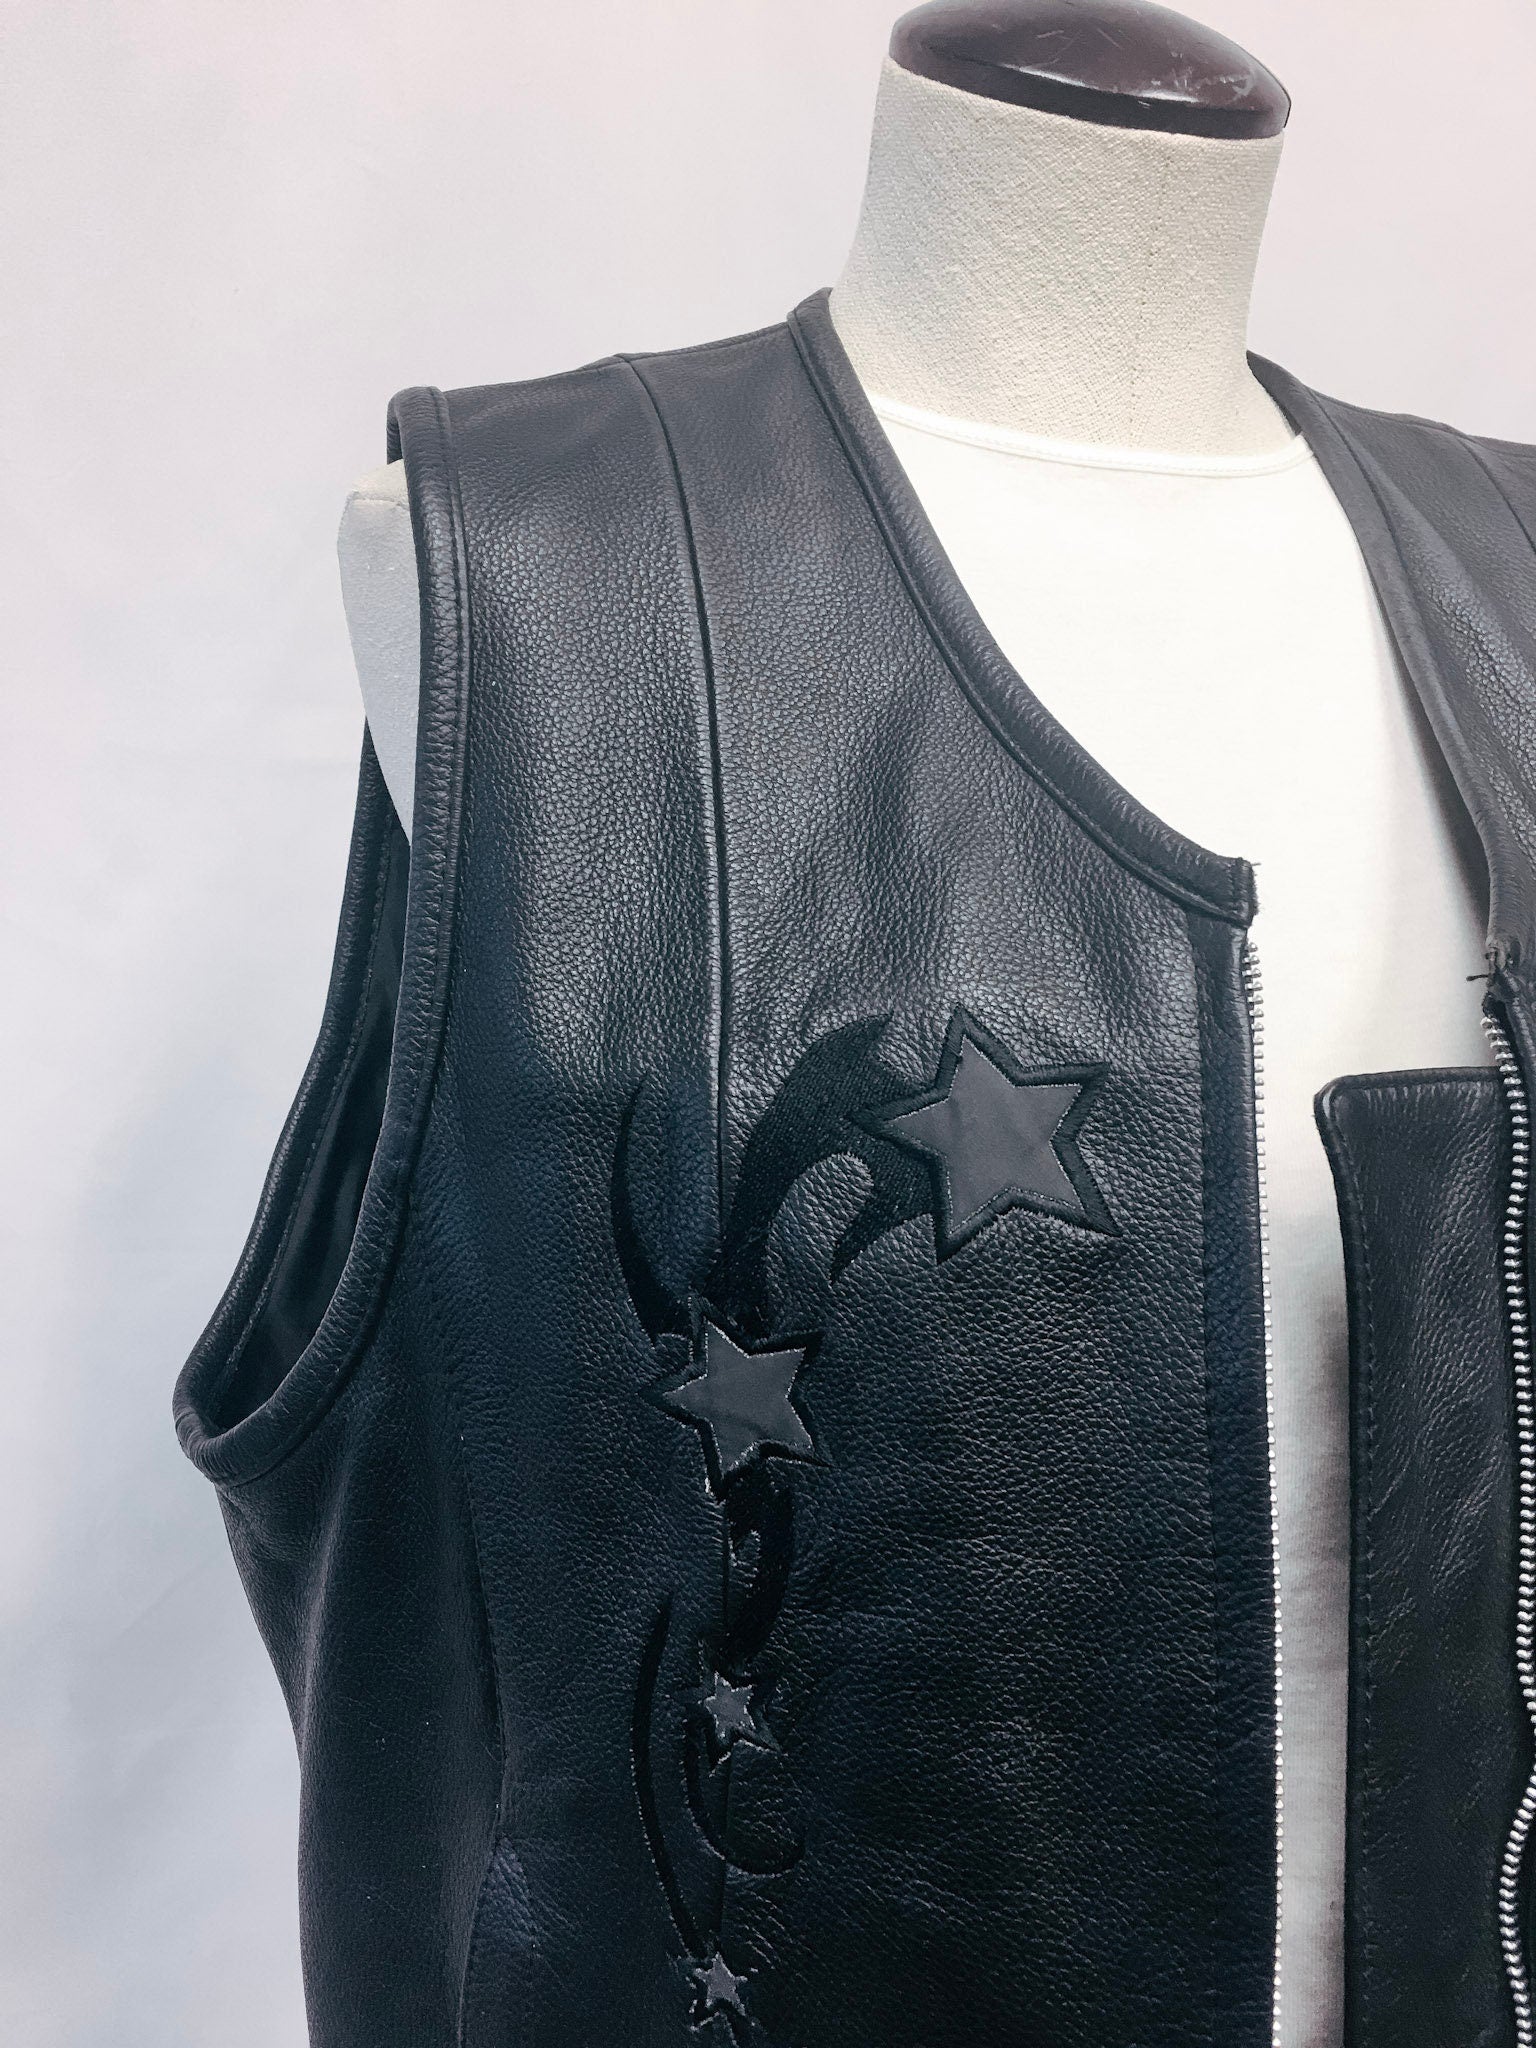 Vintage First Classics Leather Star-Detailed Biker Vest, Sz. XL